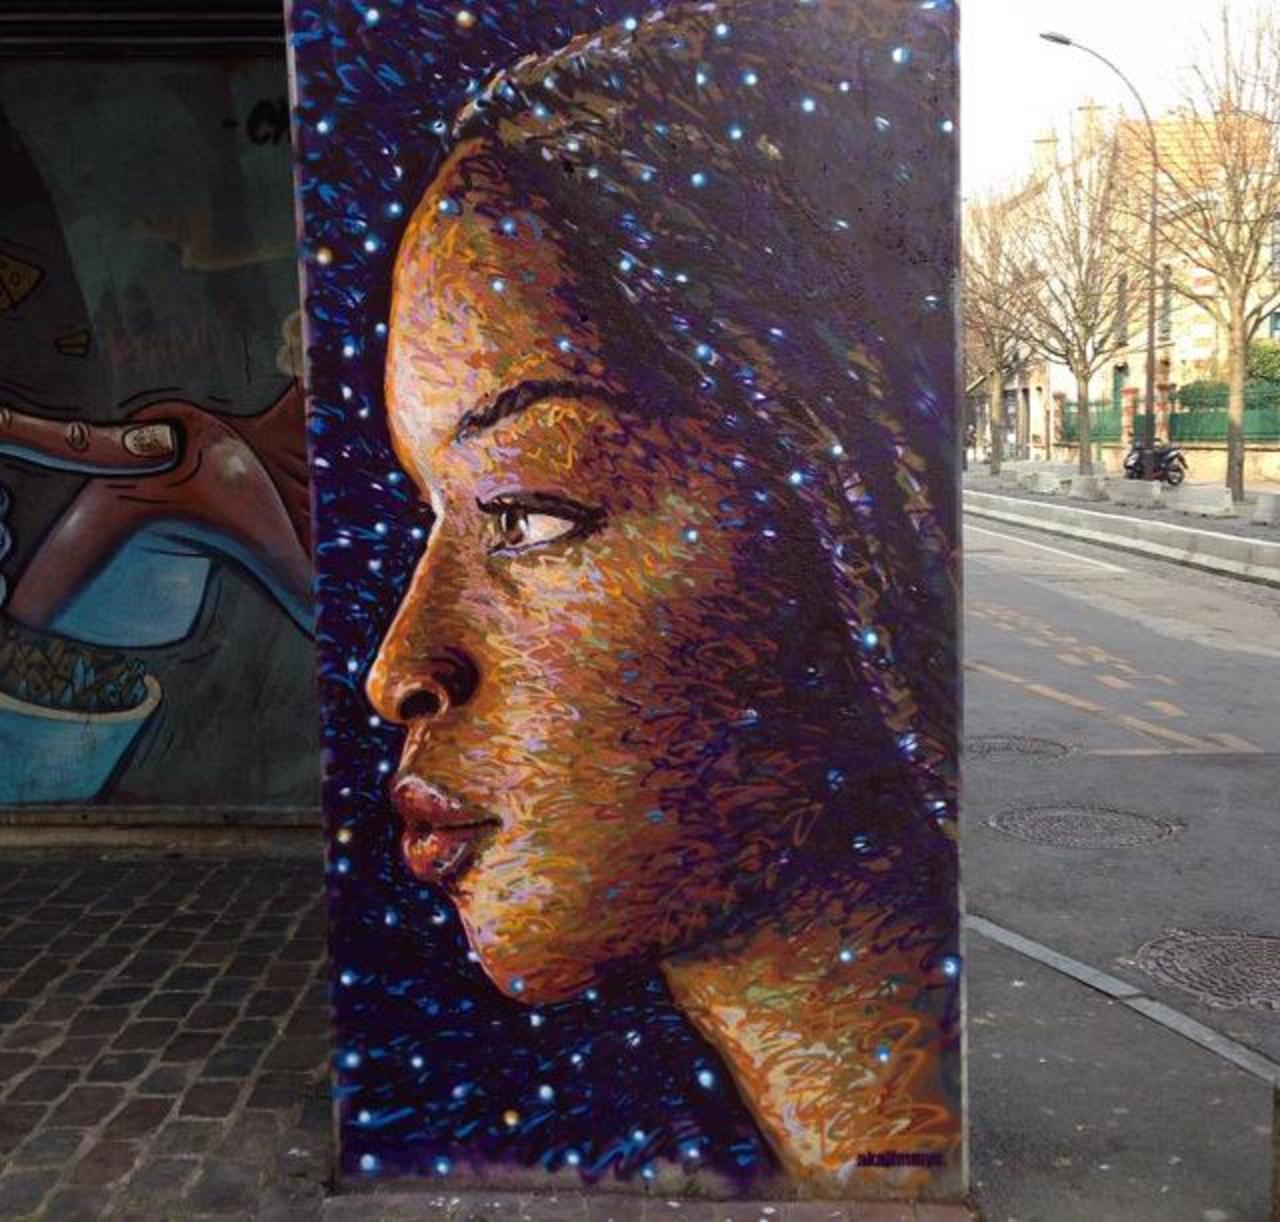 Street Art by Jimmy C in Vitry sur Seine, Paris

#art #arte #graffiti #streetart http://t.co/5xtE5MLDAk